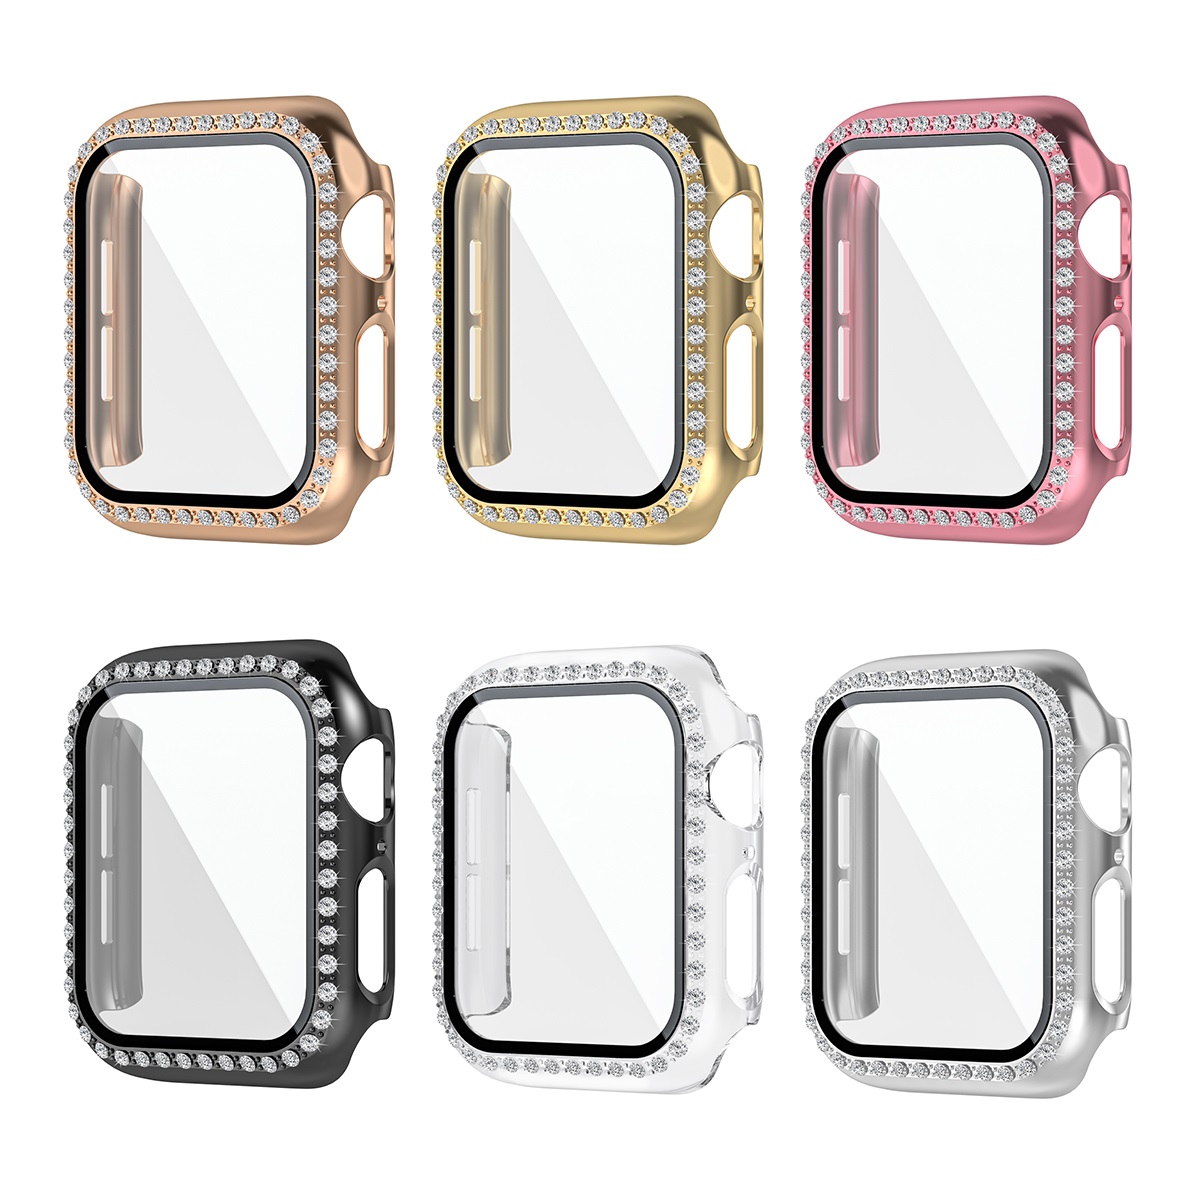 CBWC9 럭셔리 블링 다이아몬드 유리 화면 보호자 Smart Watch Case Apple Watch Bumper Cover Iwatch Series 6 5 4 3 SE